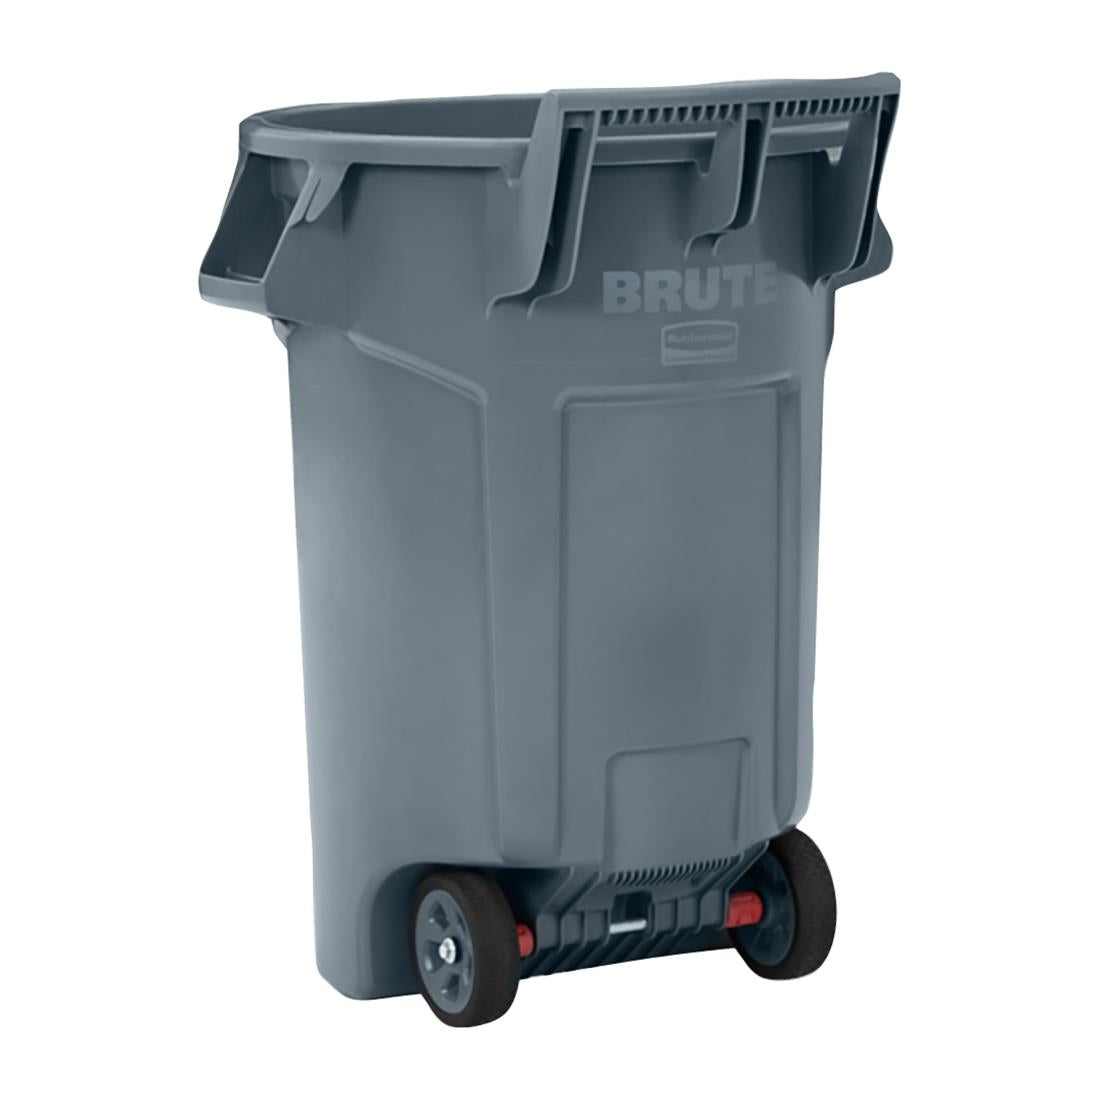 CX982 Rubbermaid Wheeled Brute Recycling Bin Grey 167L JD Catering Equipment Solutions Ltd